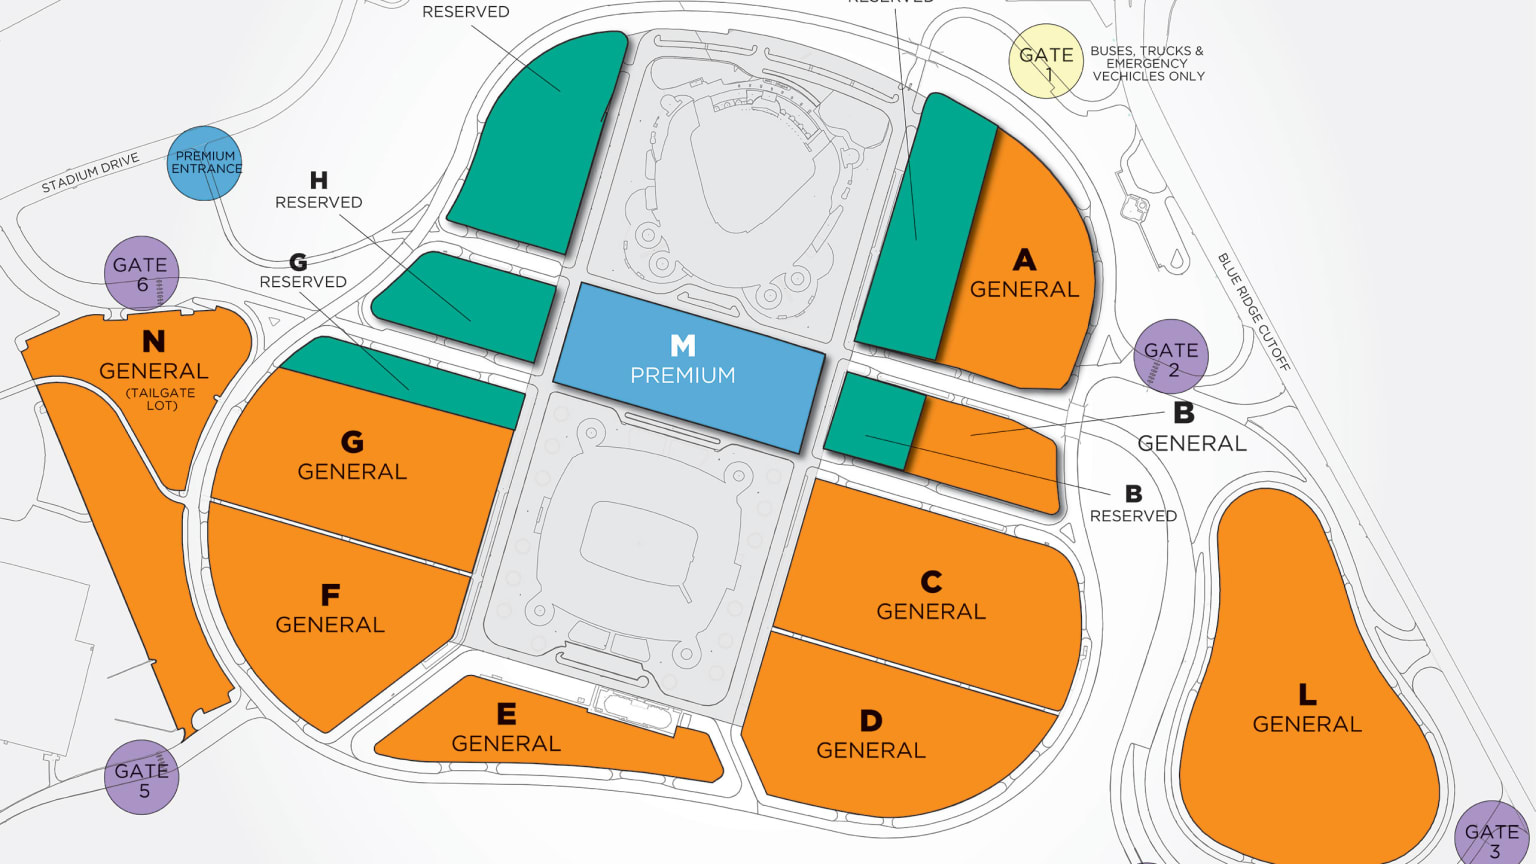 kauffman stadium - Stadium Parking Guides